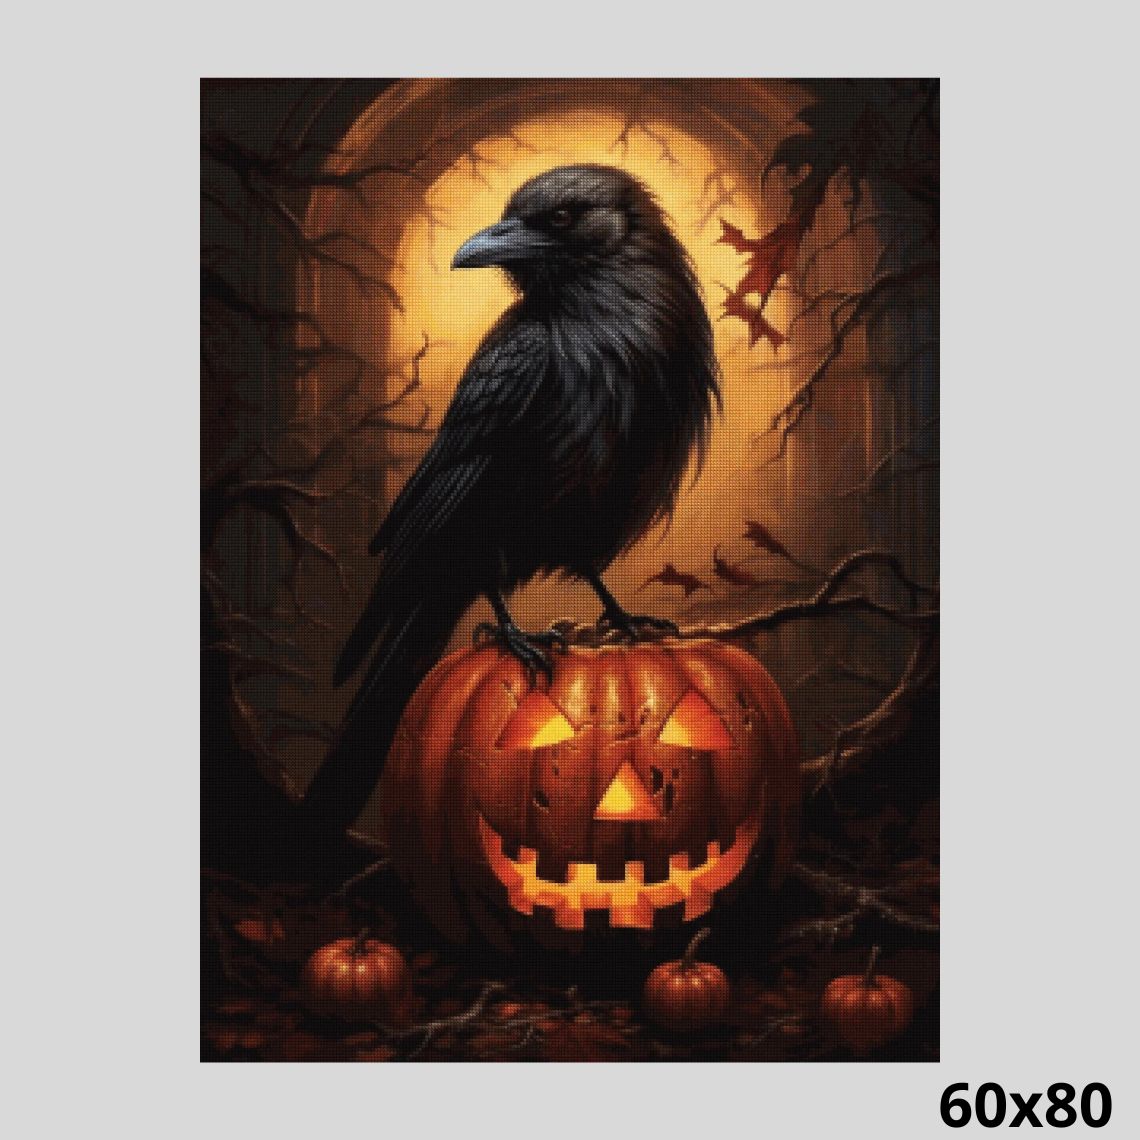 Crow on Pumpkin - 60x80 Diamond Painting